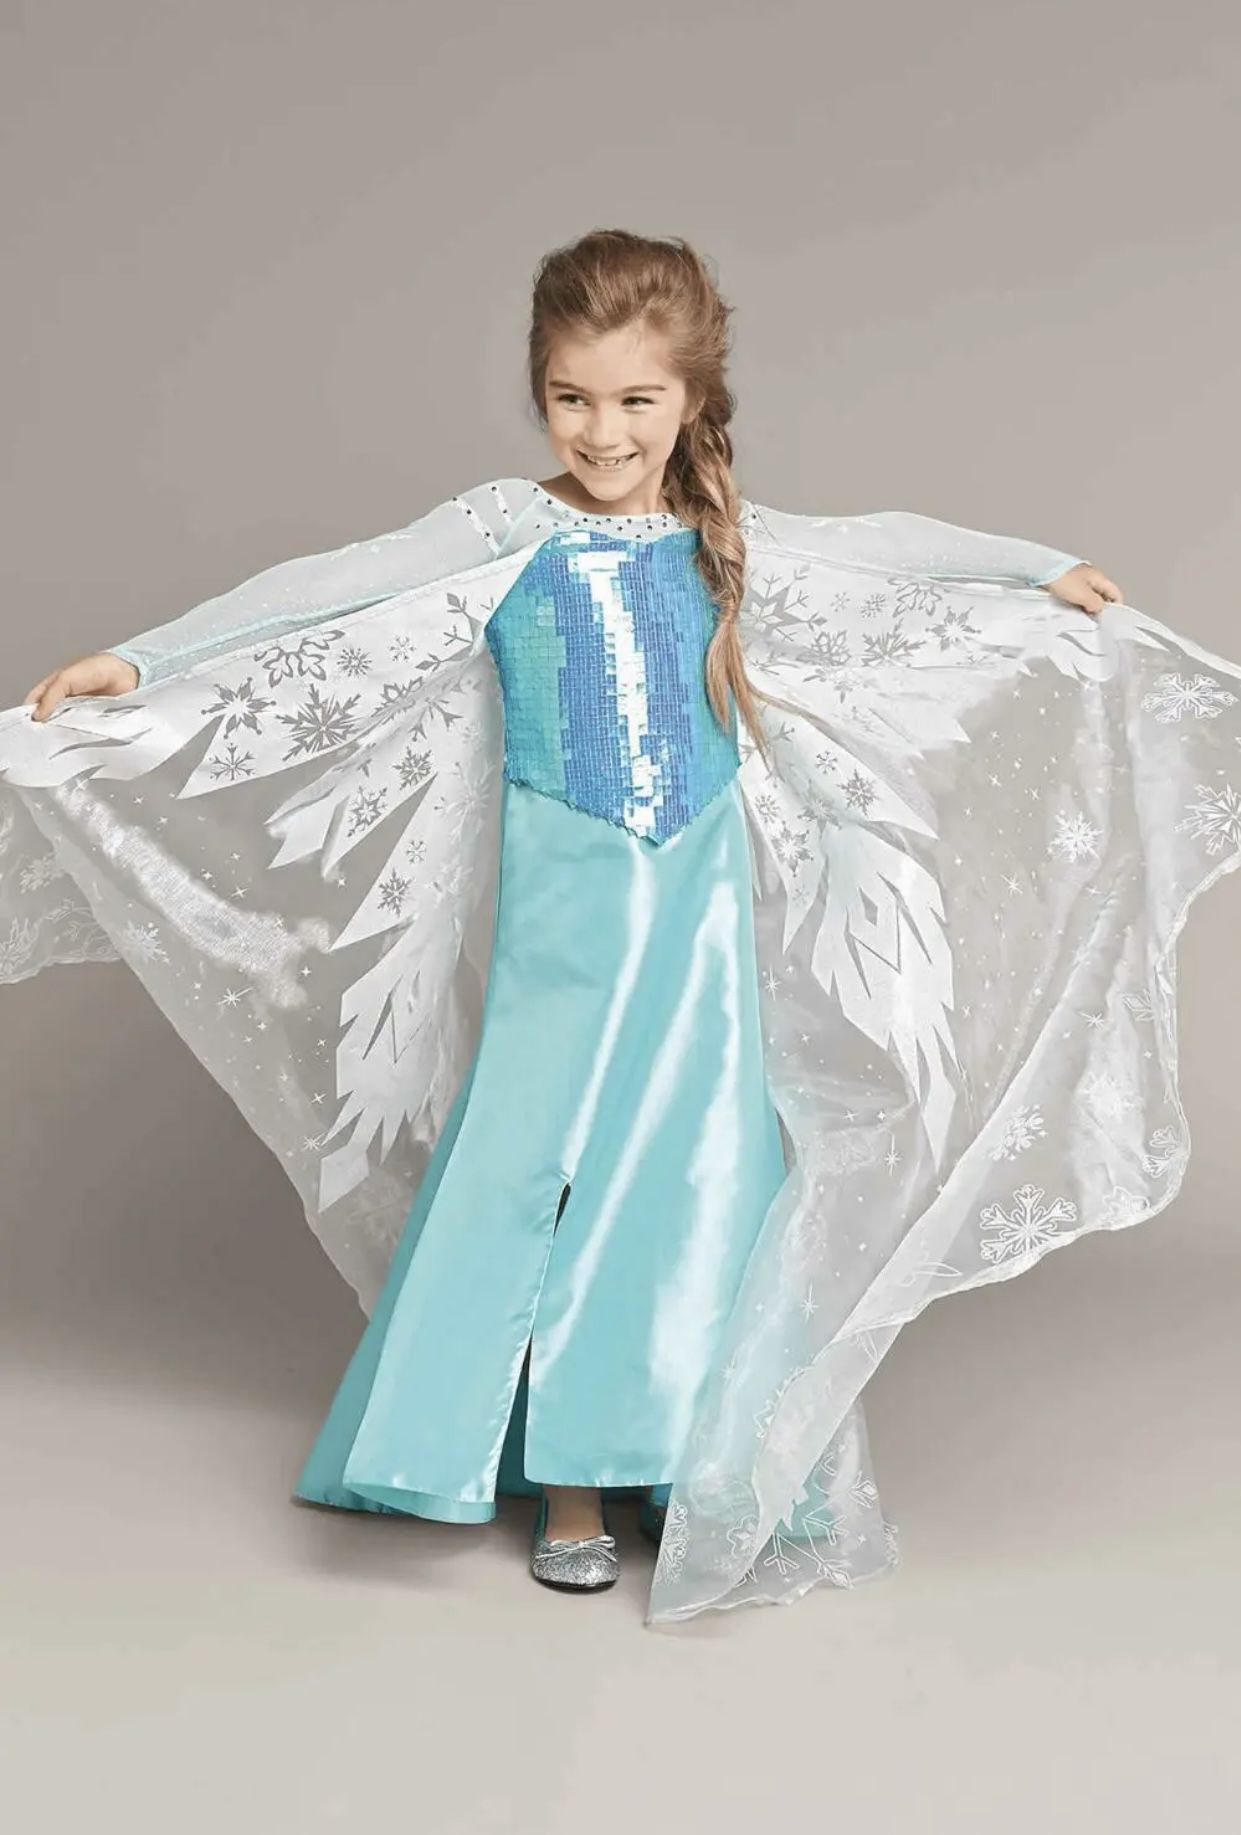 Chasing Fireflies Disney Elsa Frozen Costume, Size 4-6X